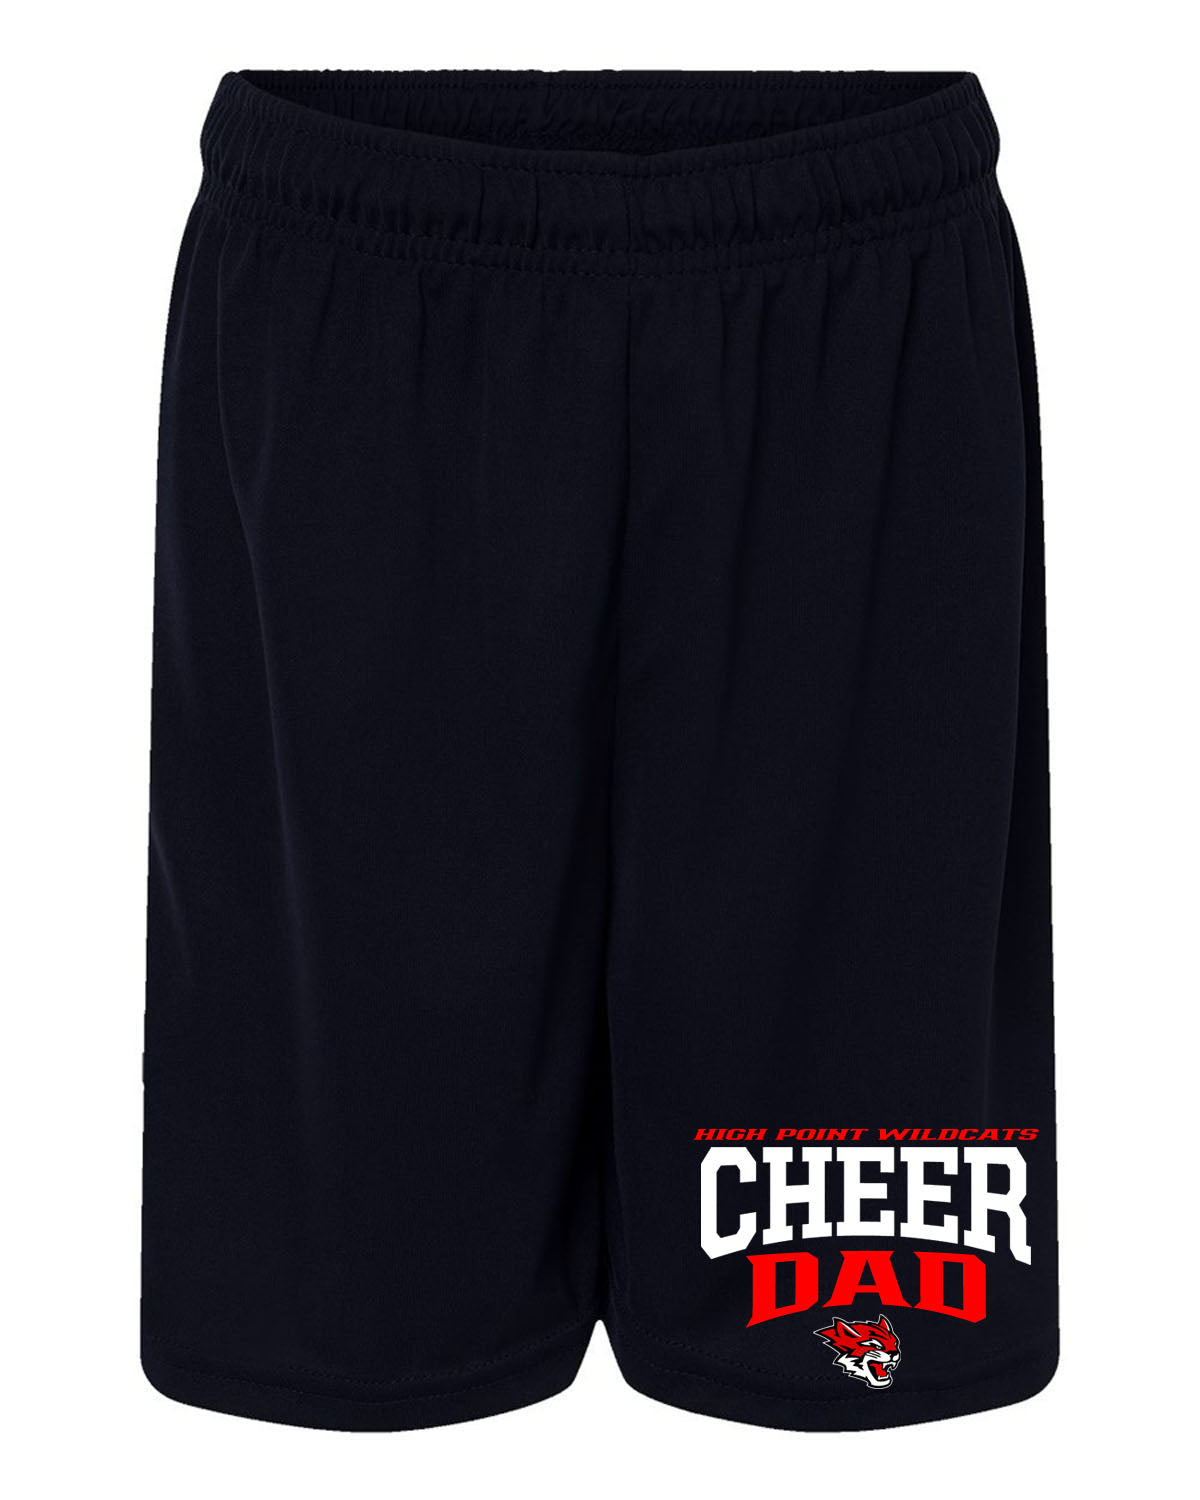 Wildcats Cheer Design 6 Performance Shorts